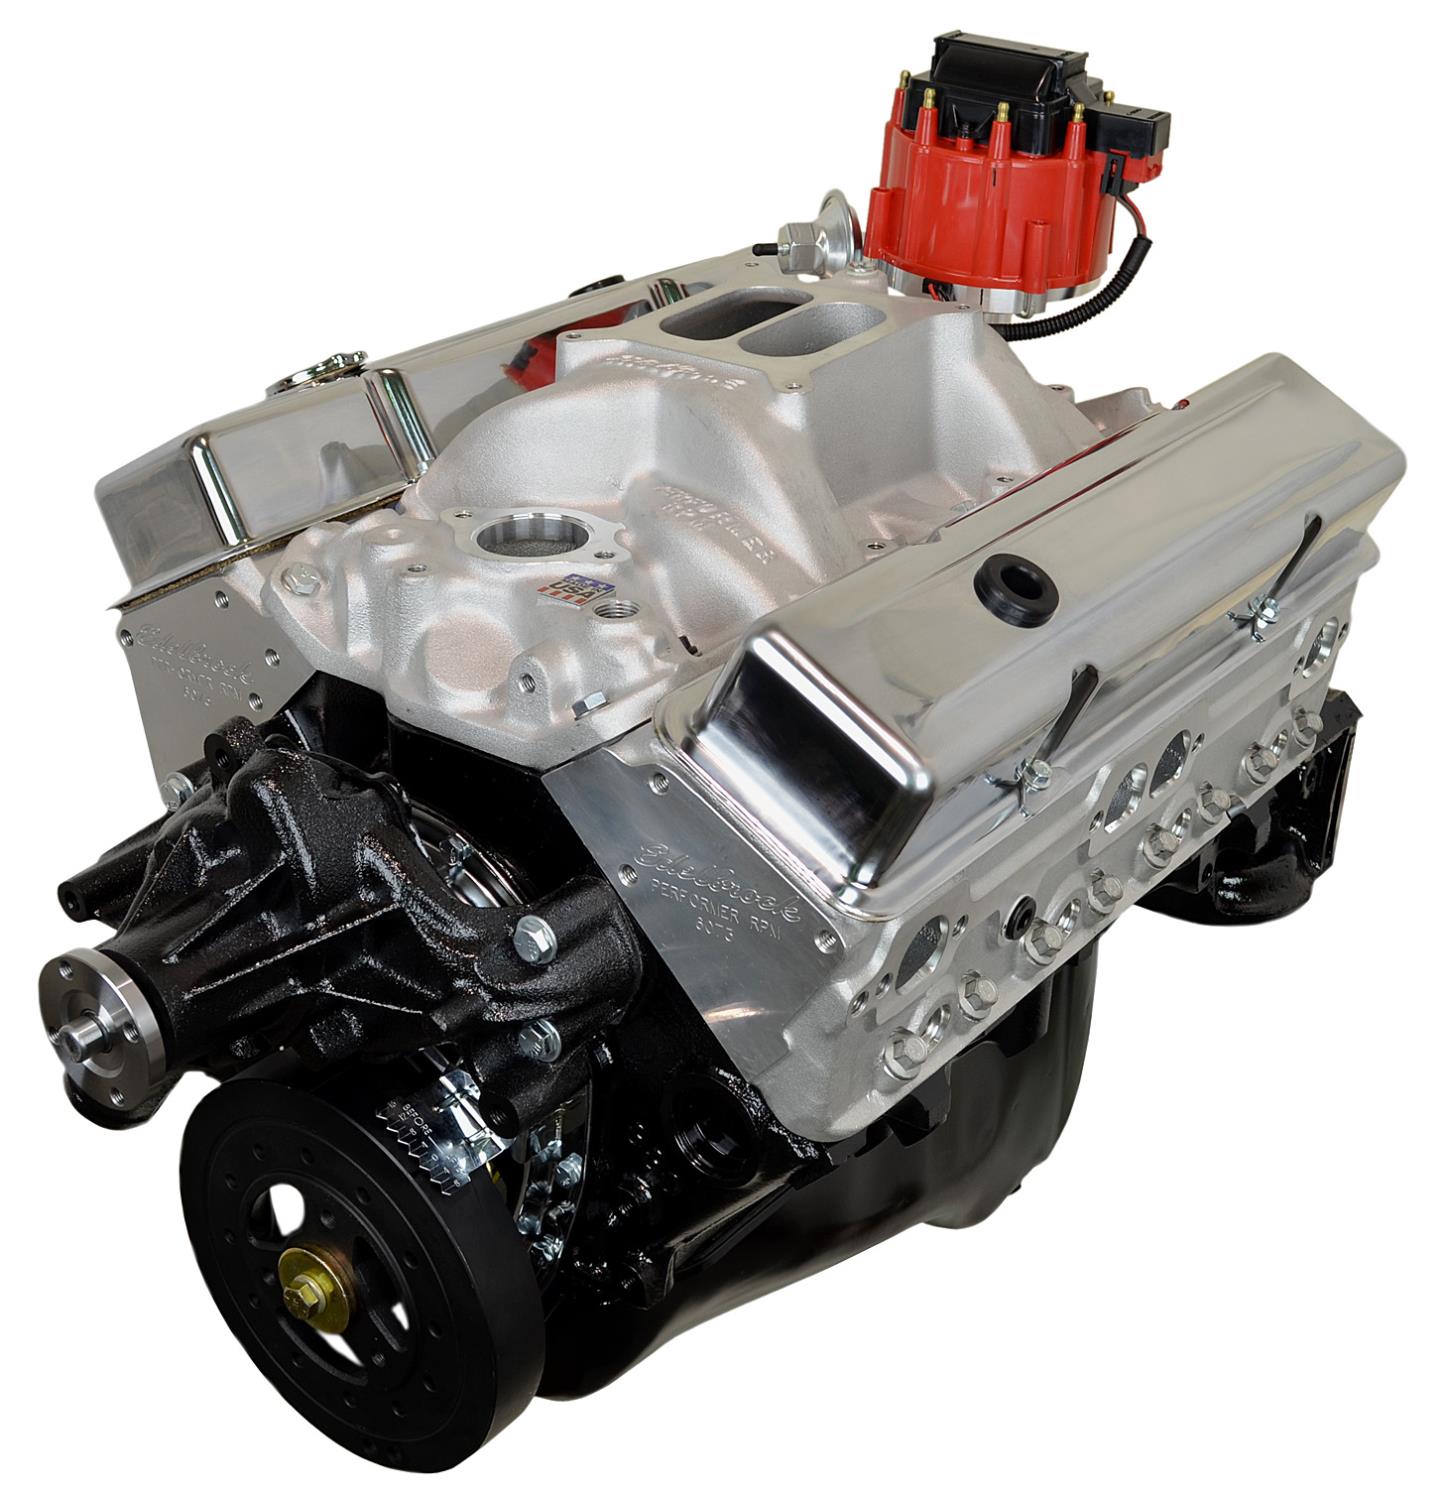 HP36M High Performance Crate Engine Small Block Chevy 383ci / 435HP / 475TQ